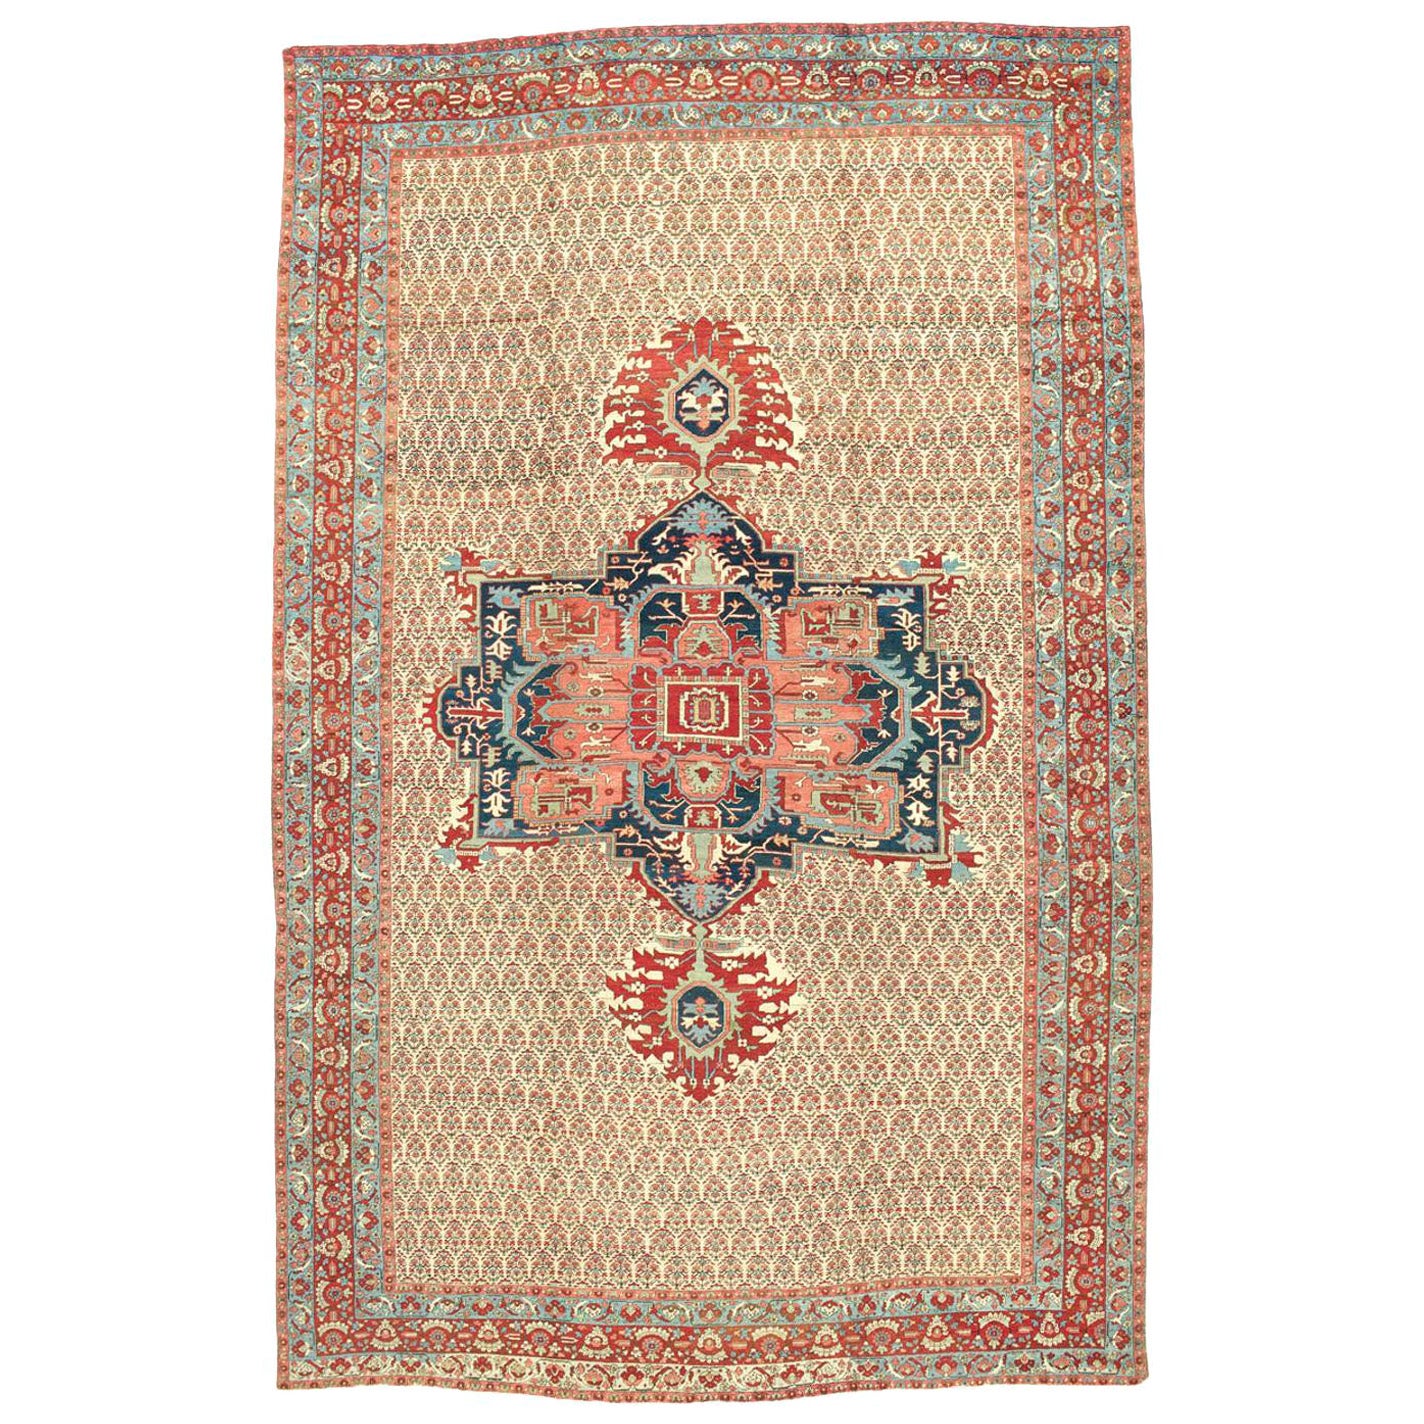 Large Antique Northwest Persian Bakhshaish Carpet, 19th Century For Sale